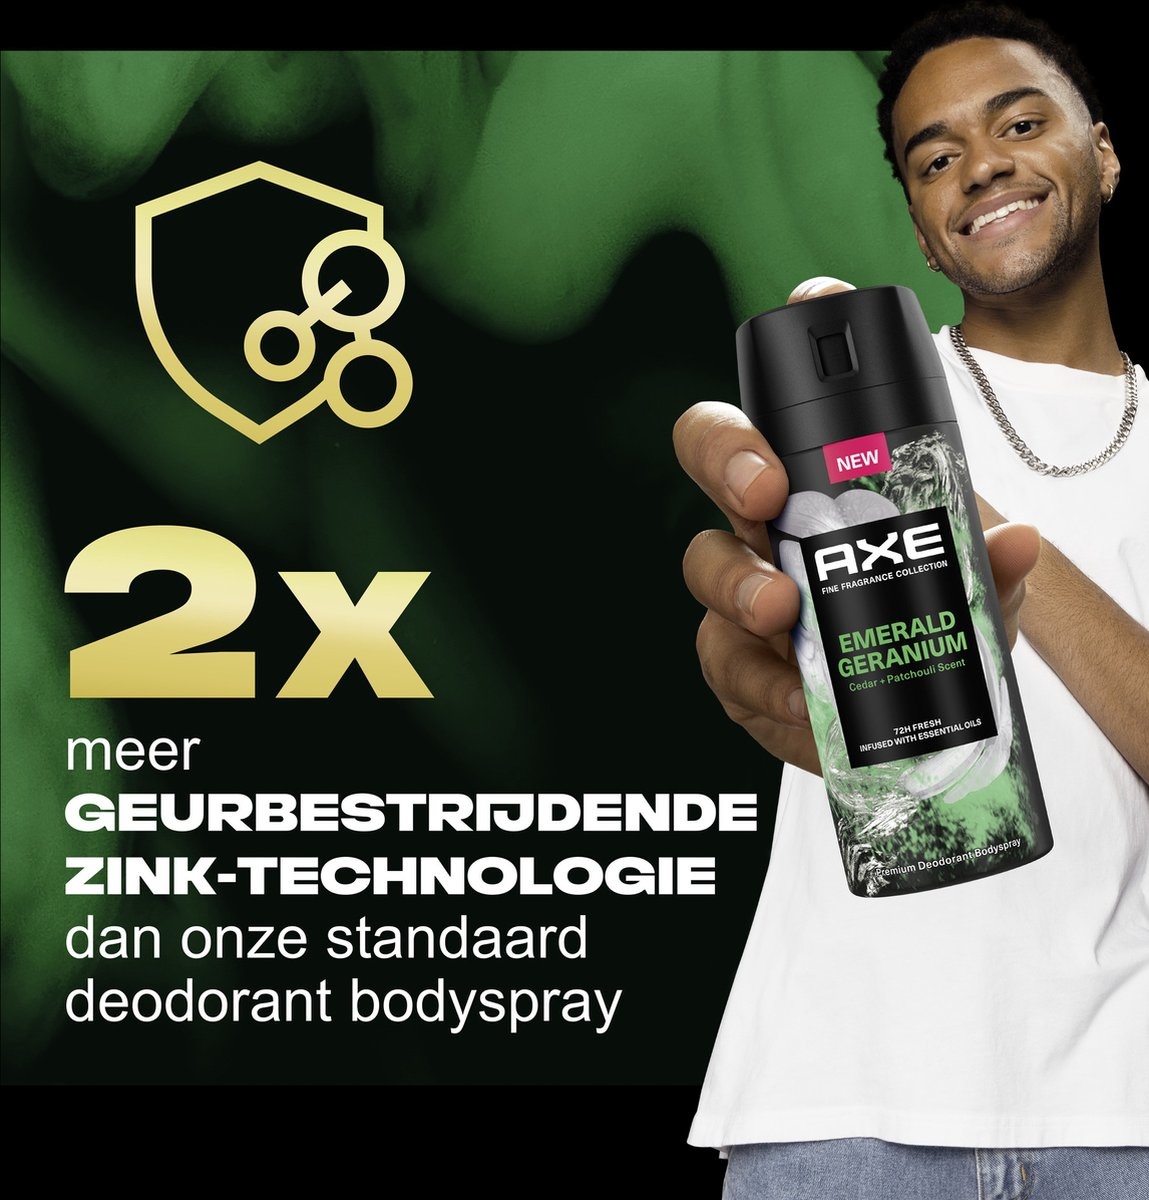 AXE Fine Fragrance Collection Emerald Geranium Premium Deodorant Body Spray 150 ml